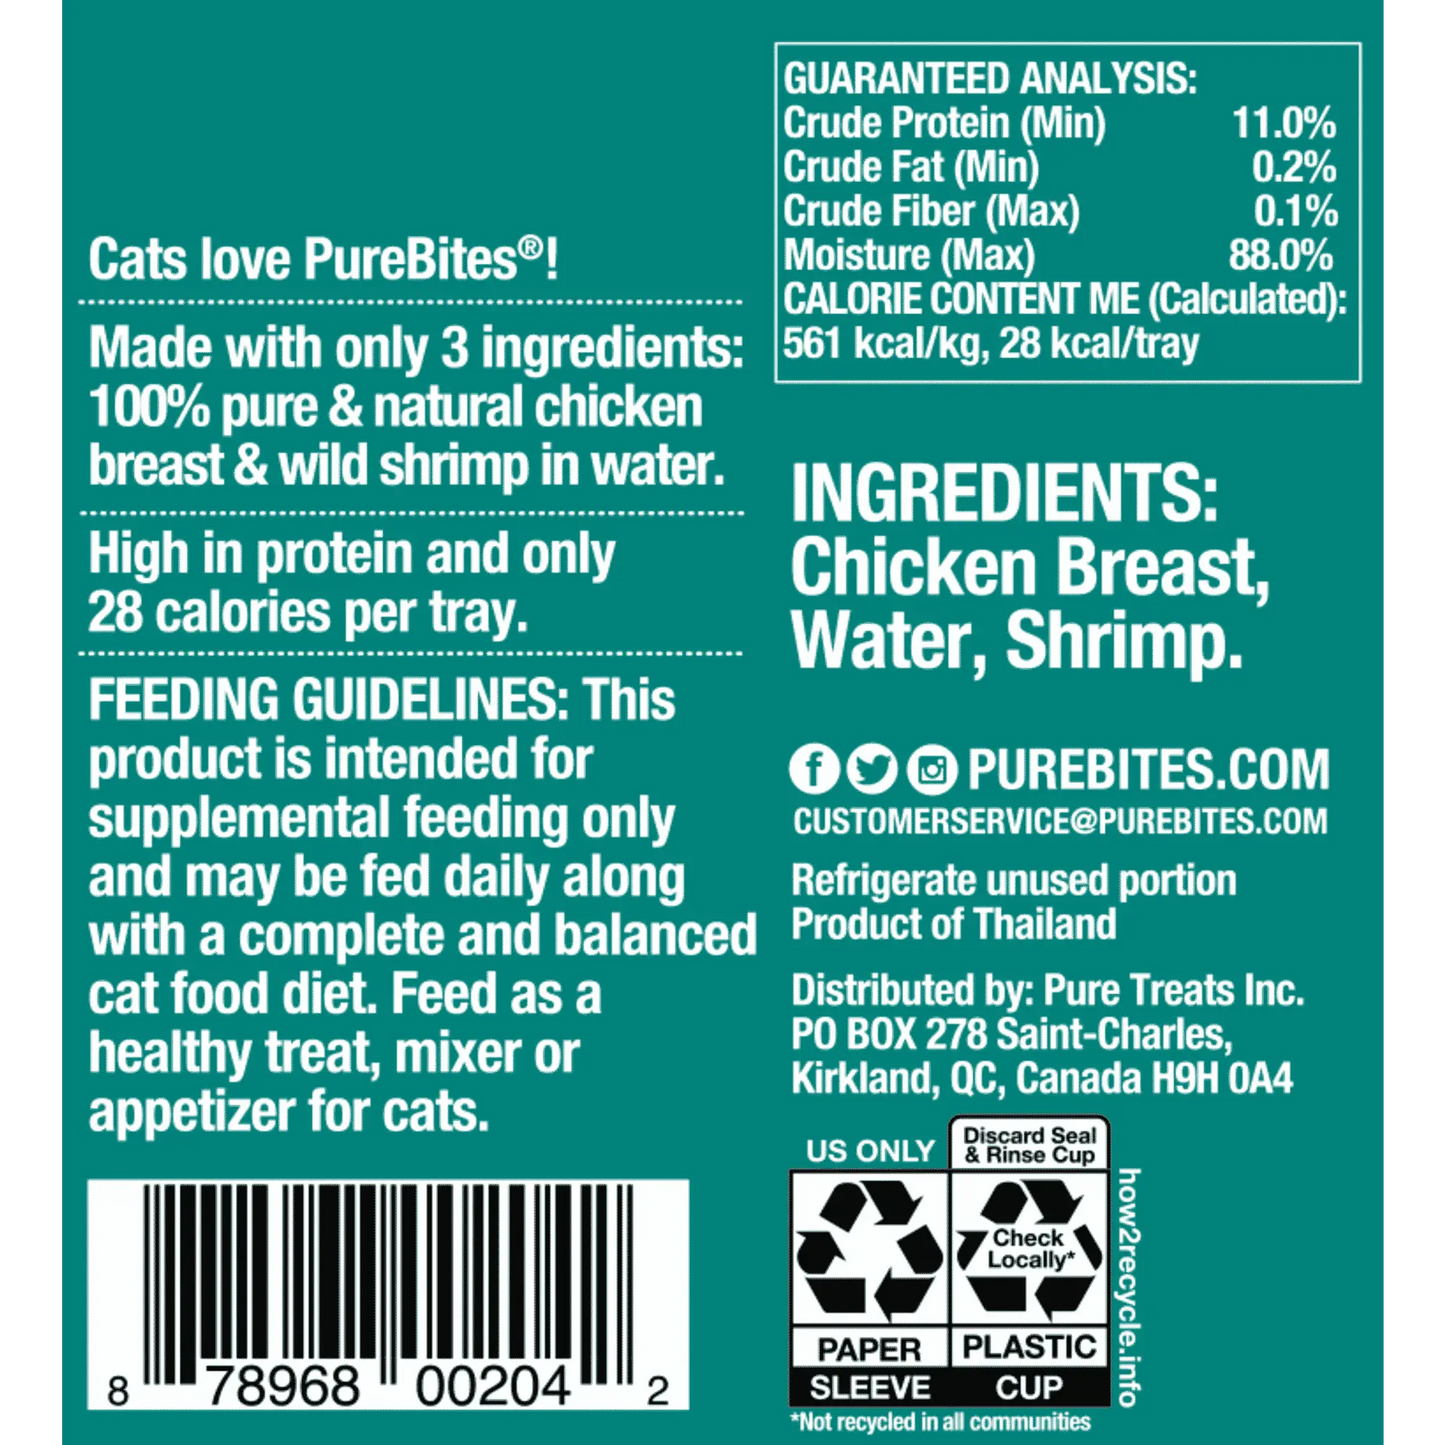 PureBites Mixers Wild Skipjack Tuna in Water Cat Food 12 / 1.76 oz